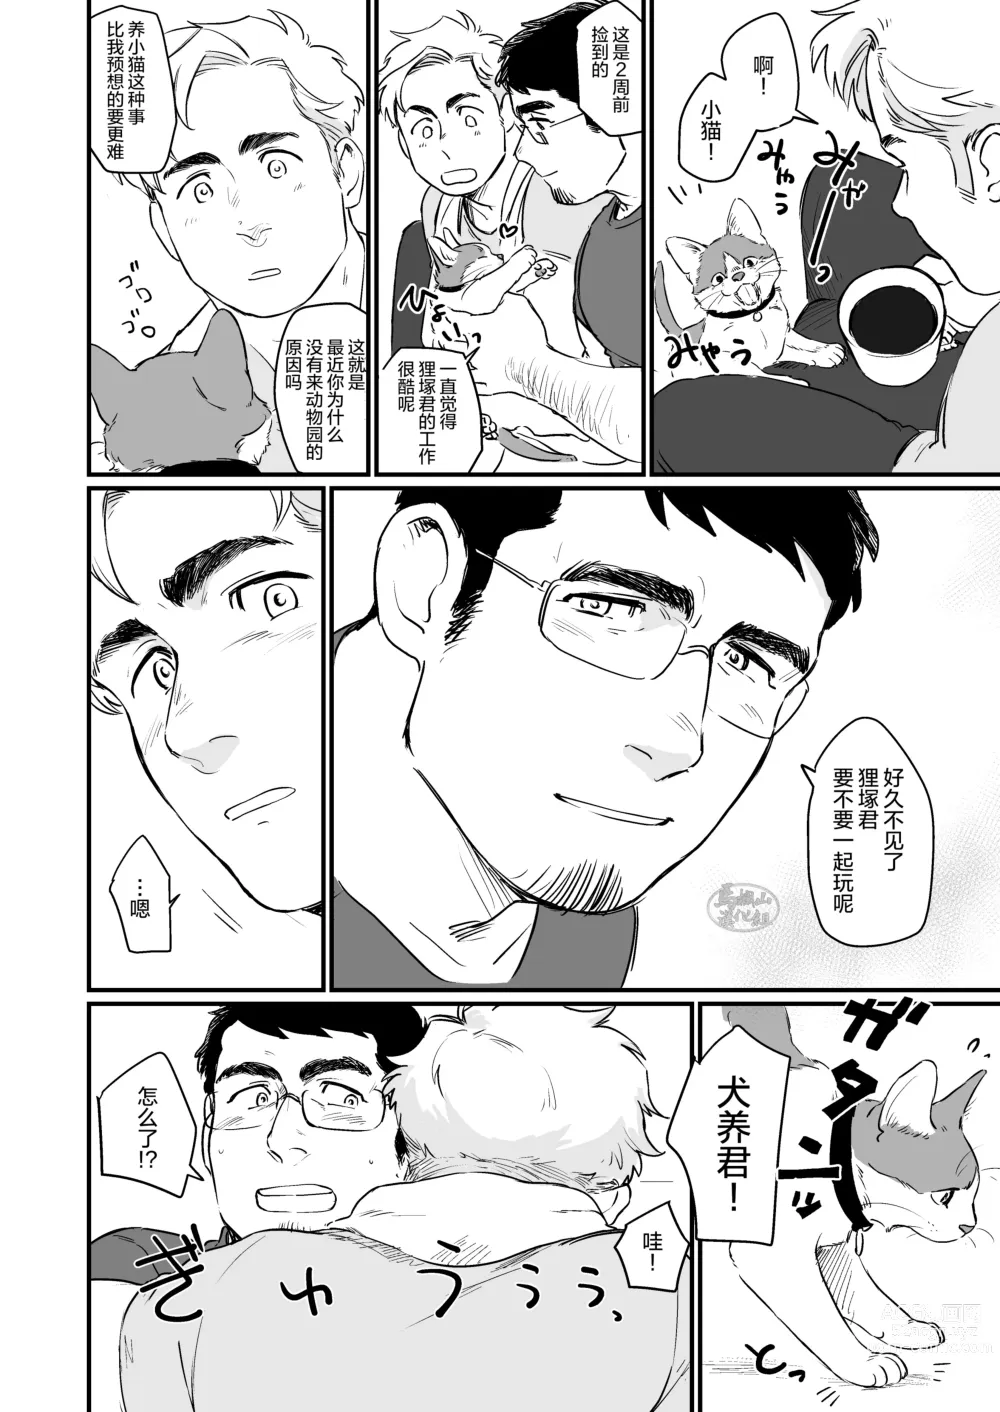 Page 12 of manga ビースティコンプレックス.动物狂想曲